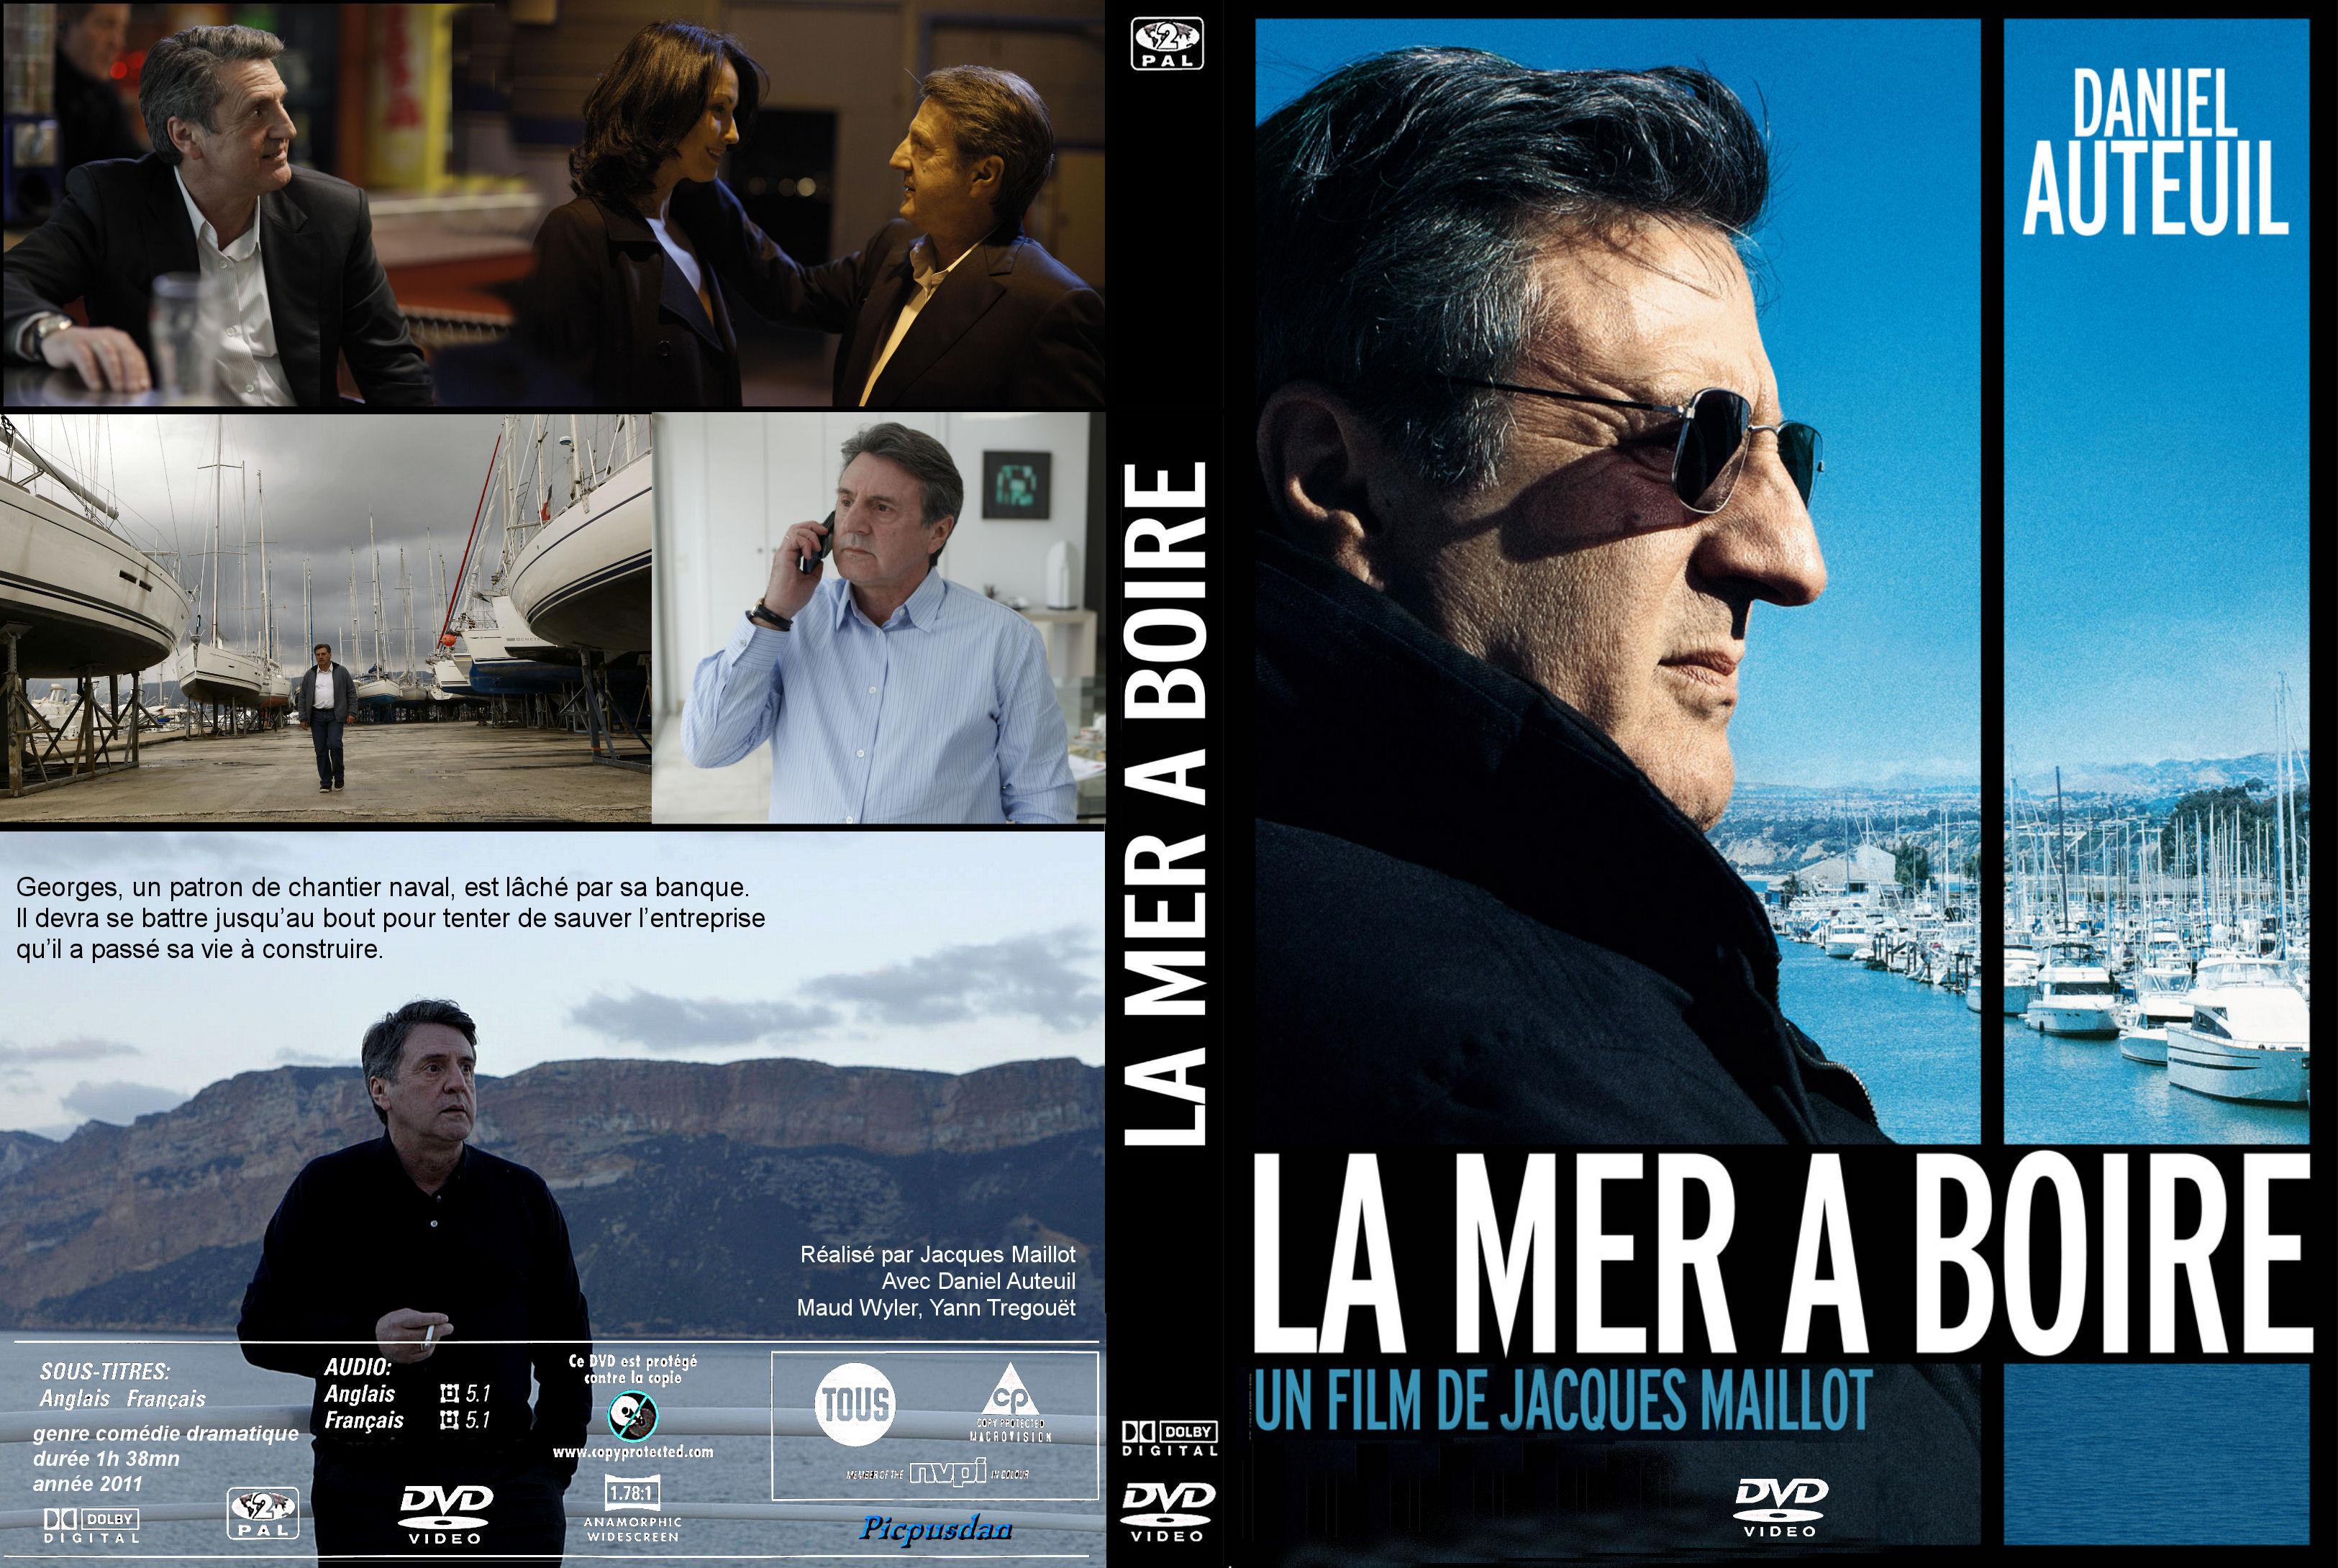 Jaquette DVD La mer  boire (2011) custom